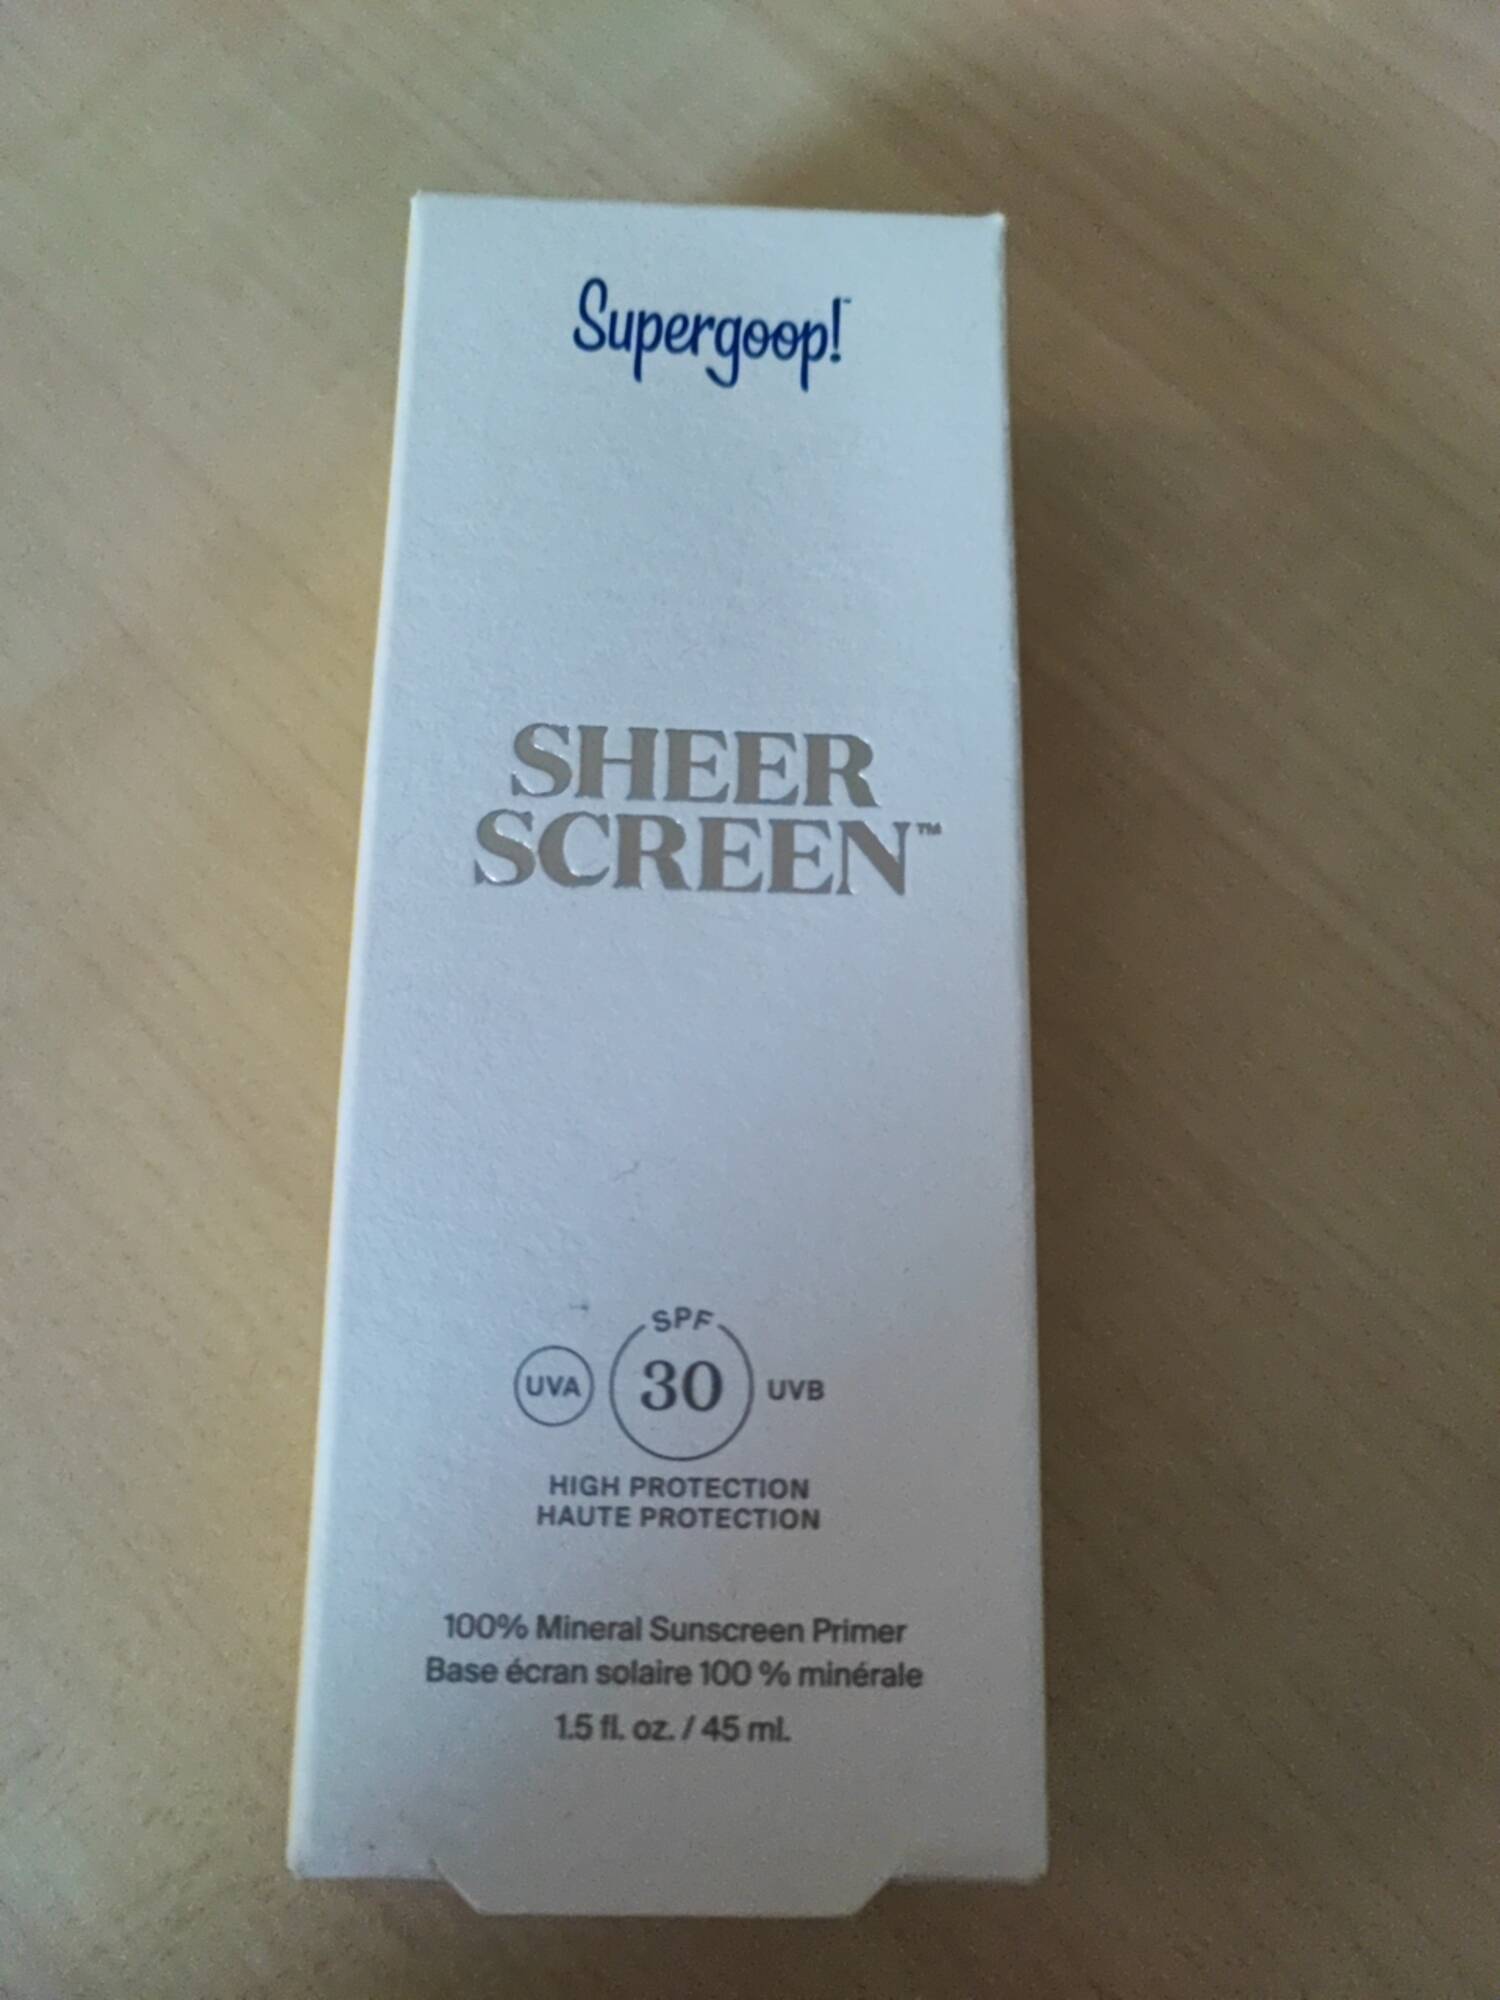 SUPERGOOP! - Sheer screen SPF 30